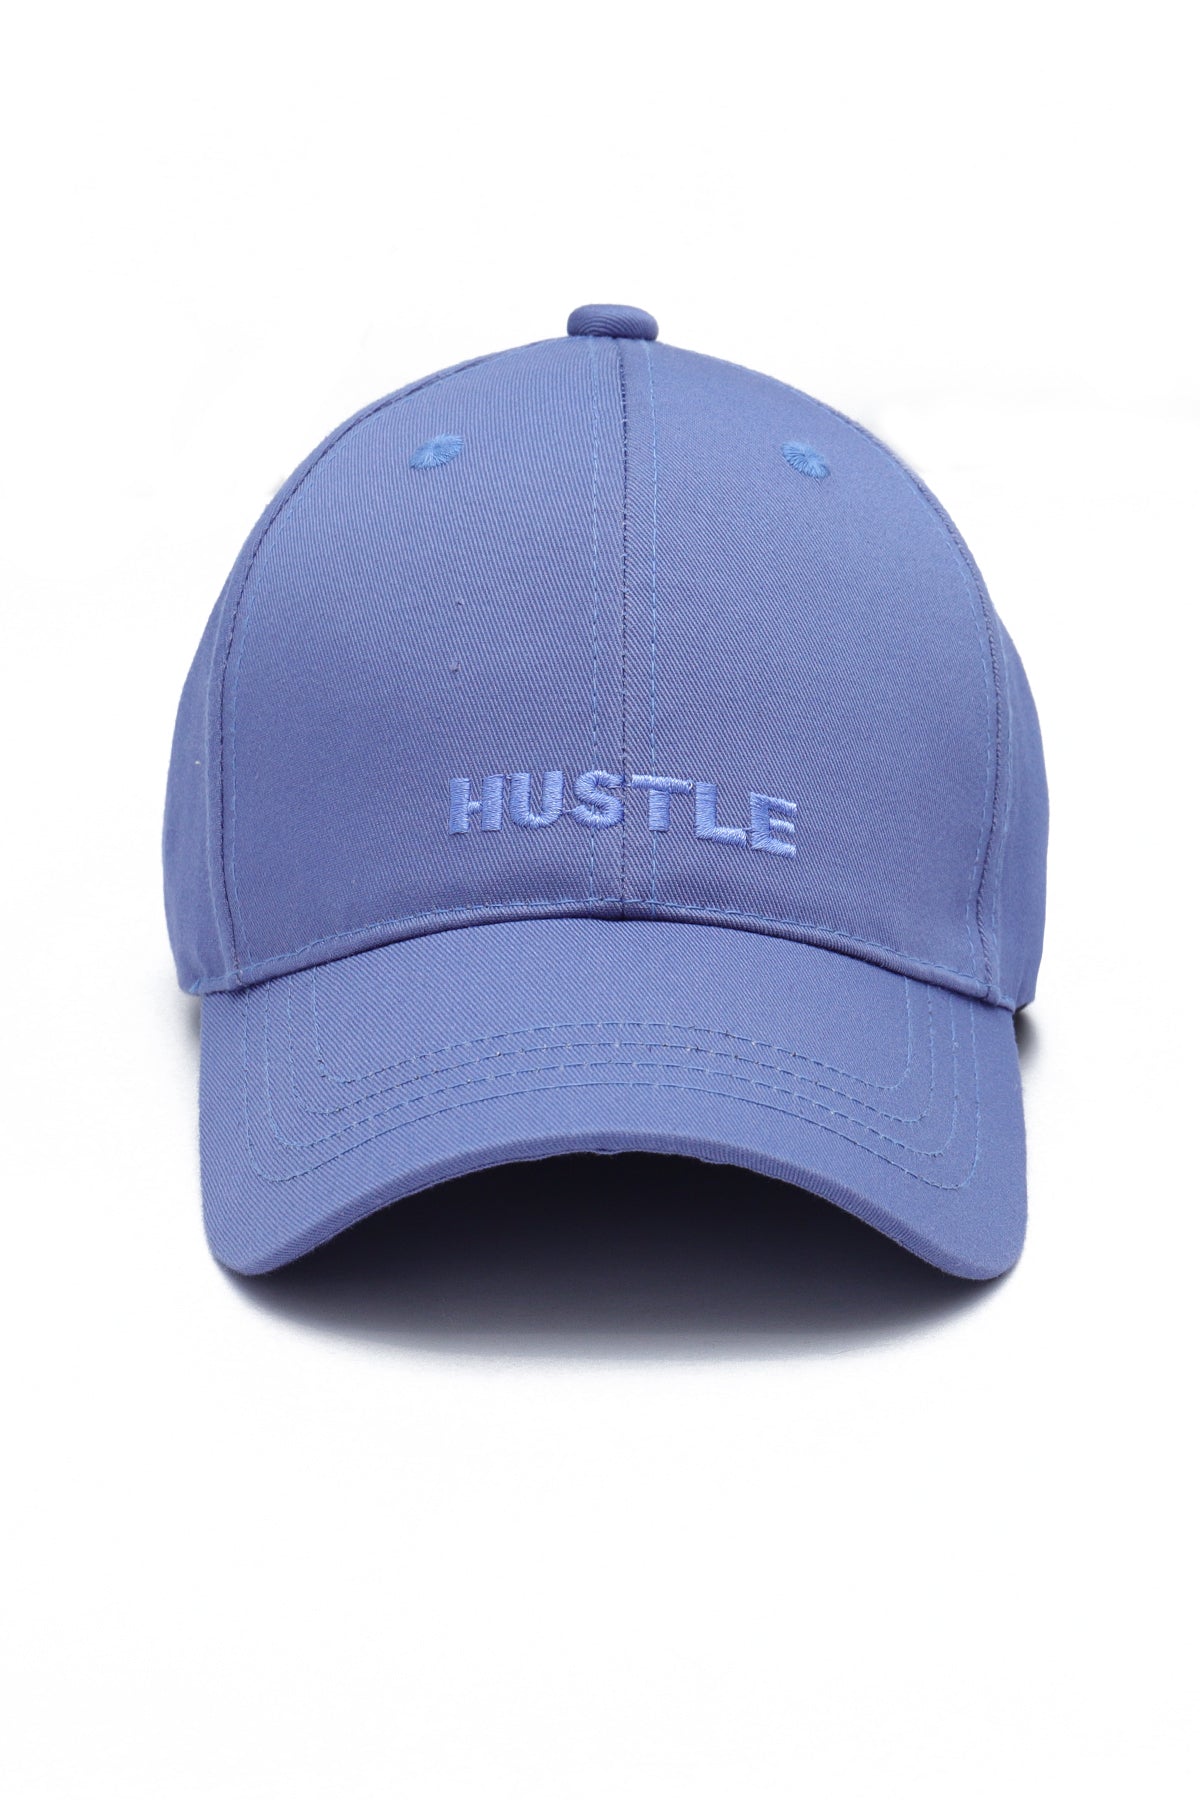 Hustle Men's Casual Cap